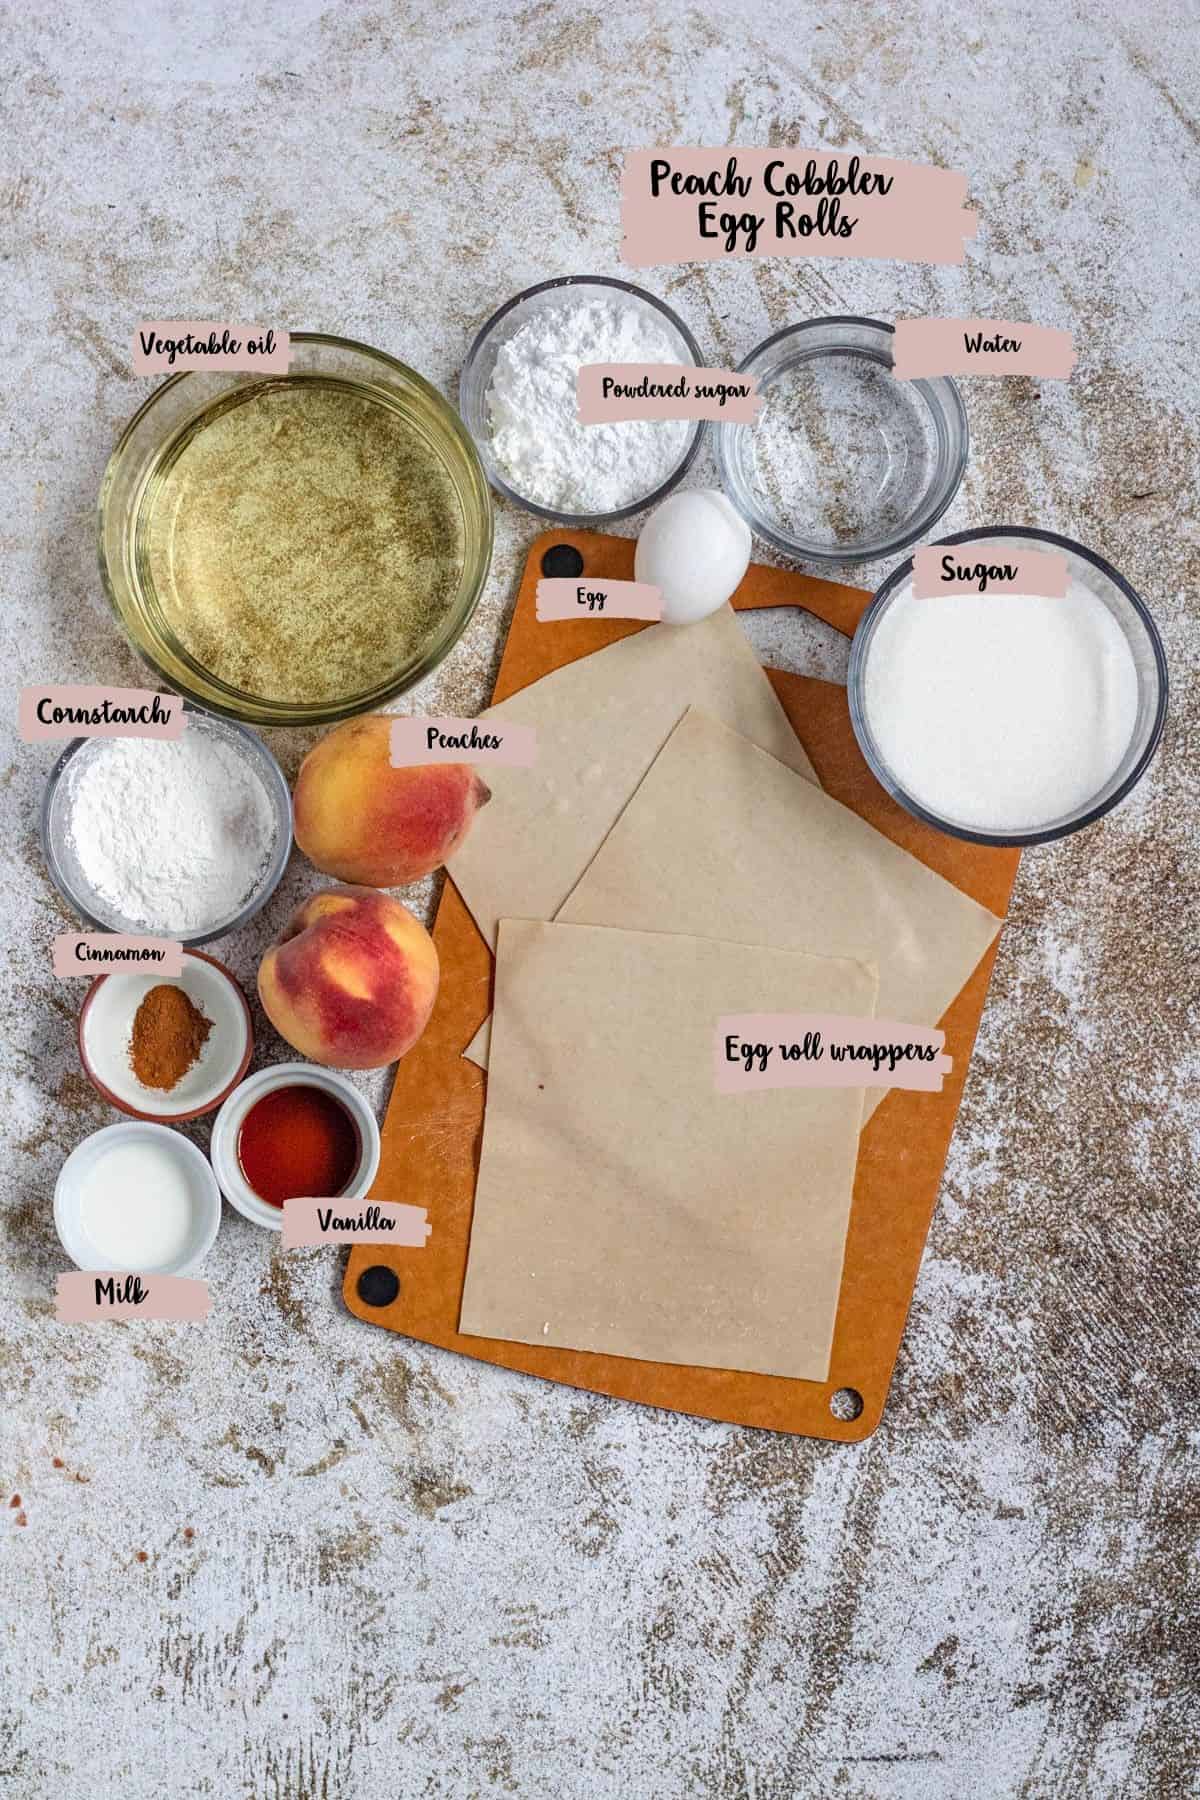 Ingredients shown to make peach cobbler egg rolls. 